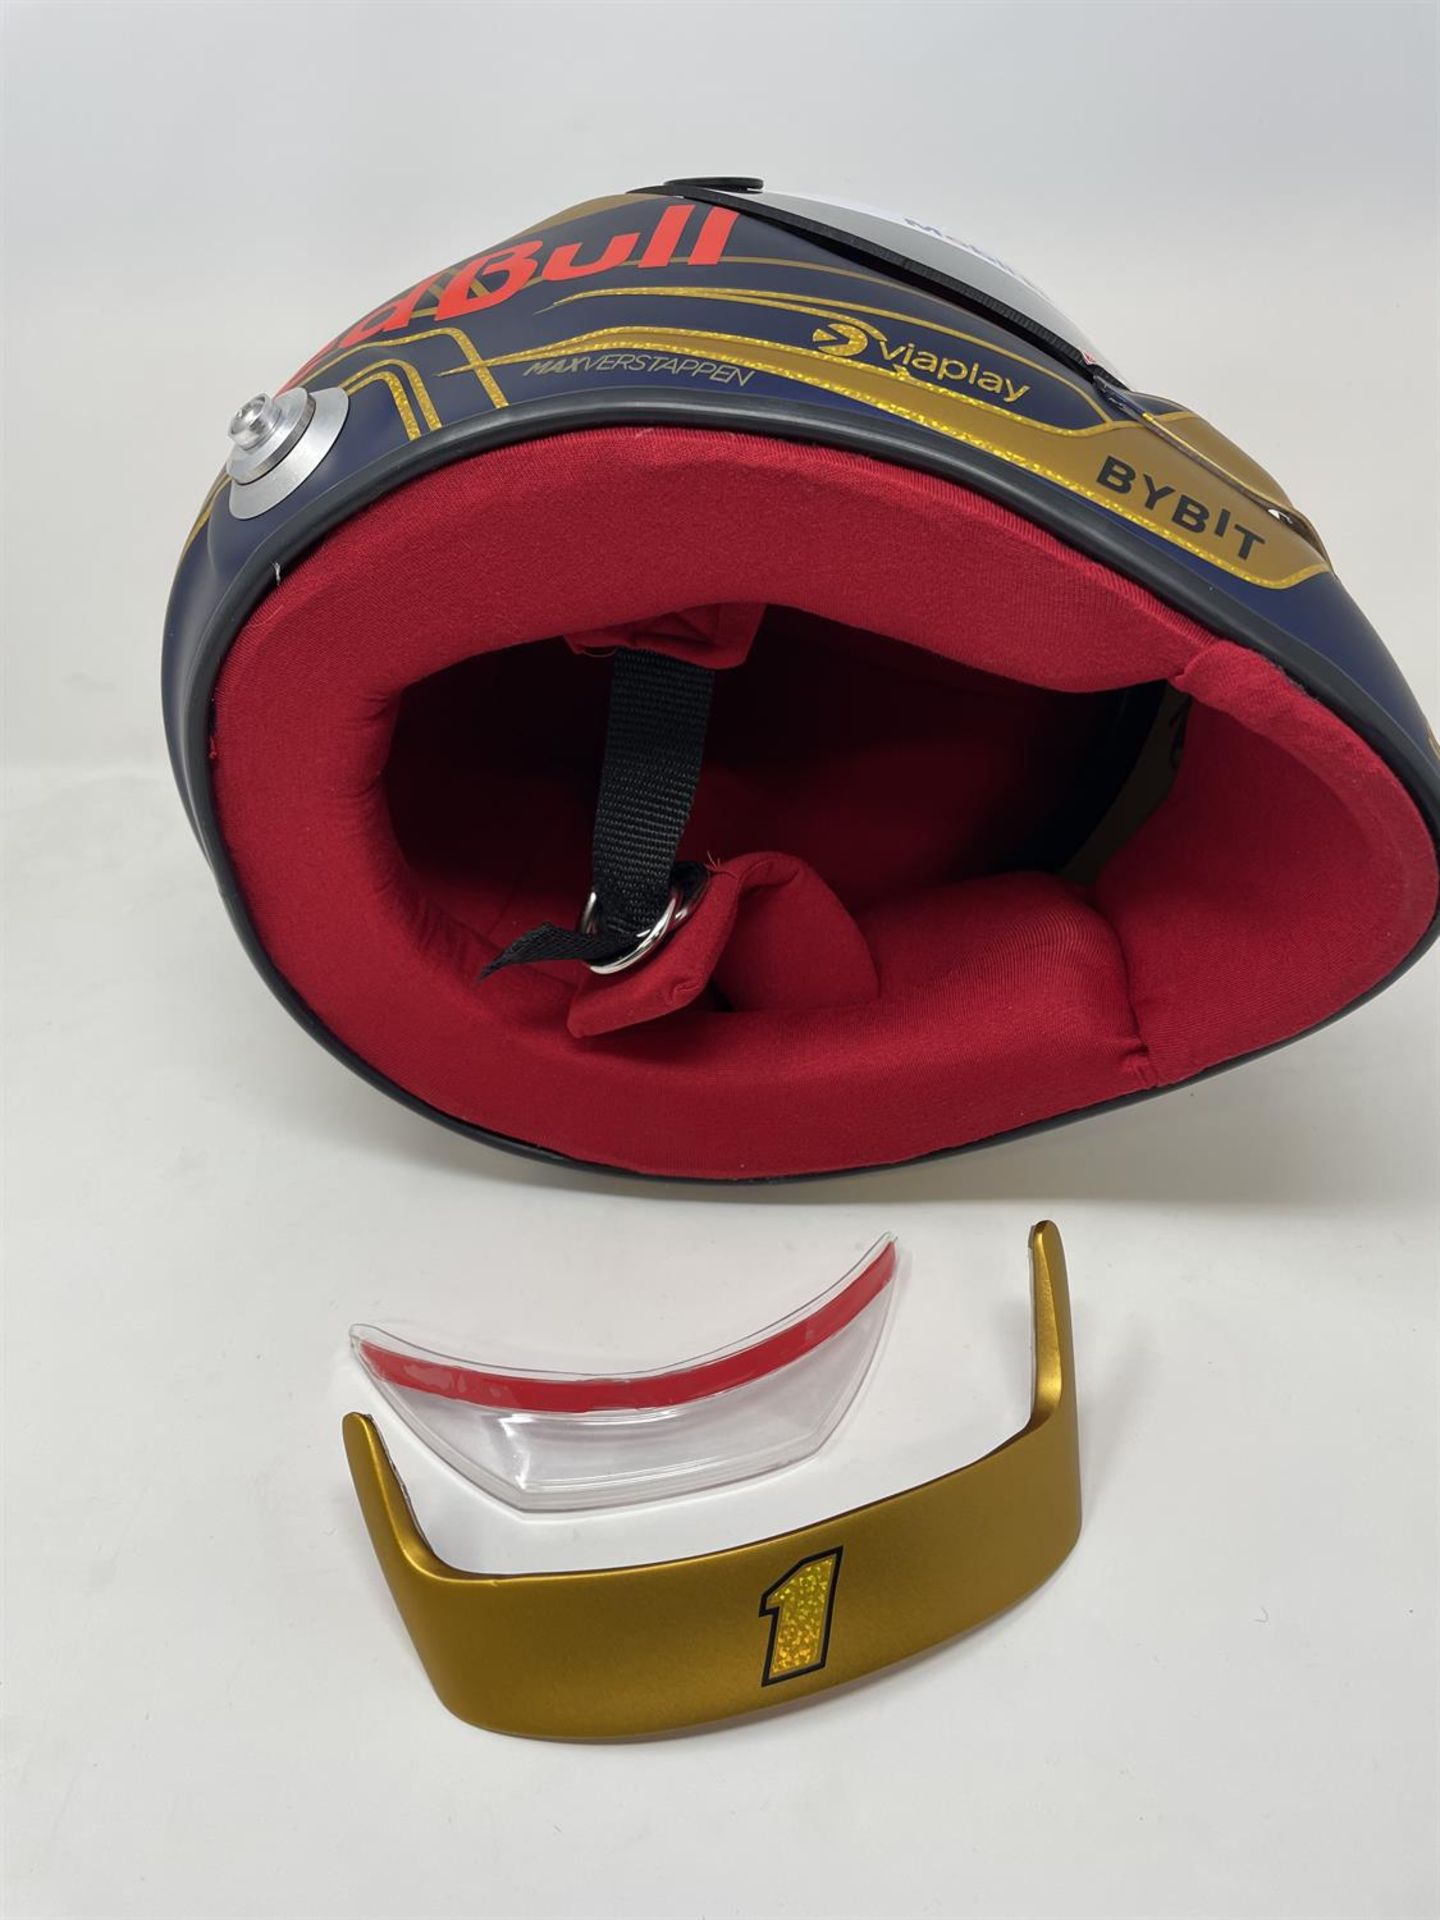 2023 Max Vestappen-Signed Replica Helmet - Image 5 of 7